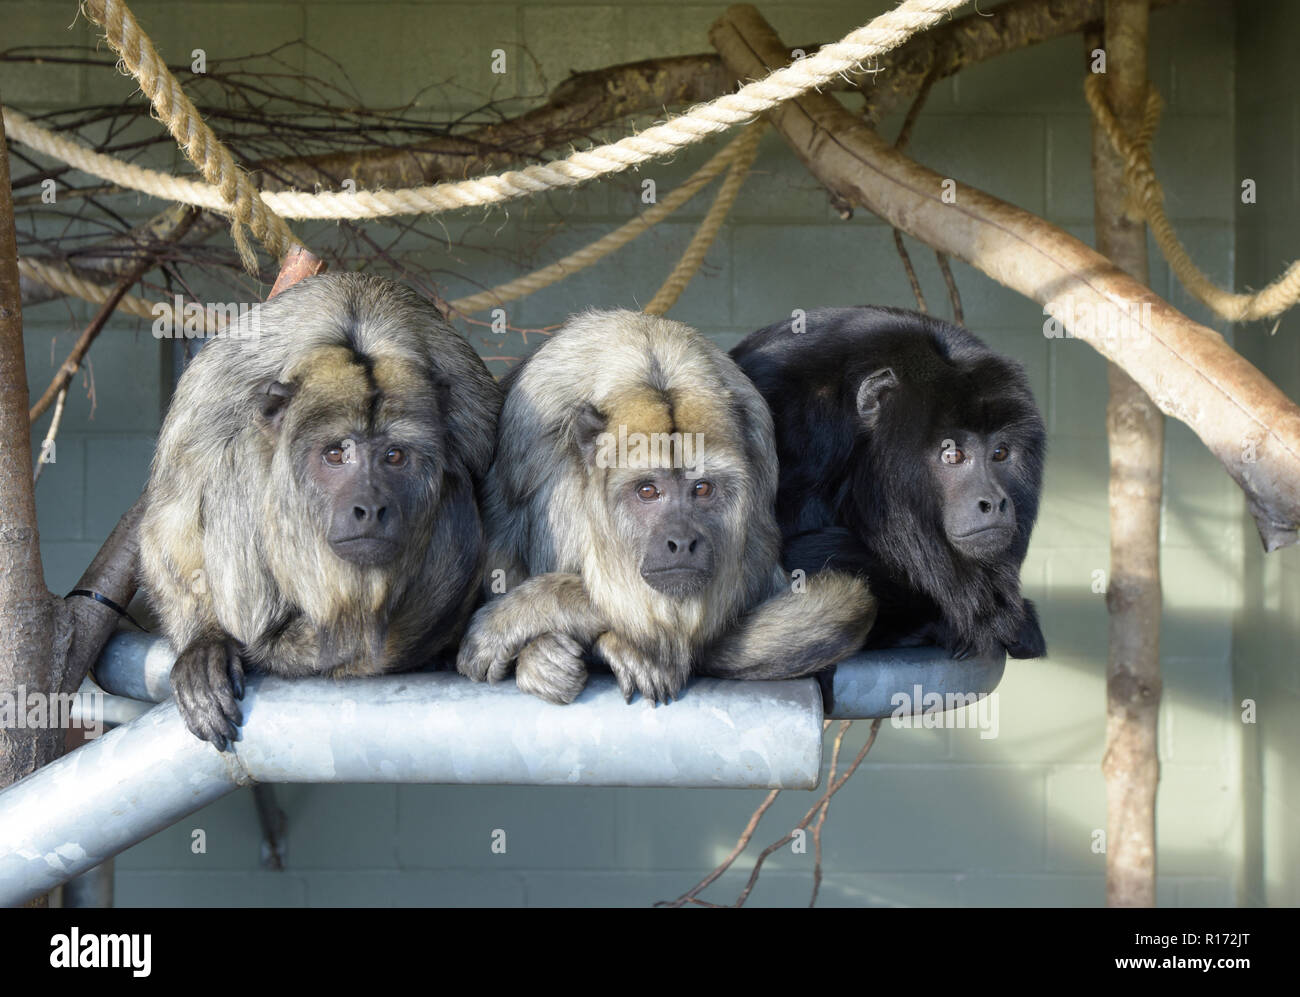 Three Howler monkeys (Alouatta Caraya) lining up in a cage at Banham Zoo Norfolk UK Stock Photo